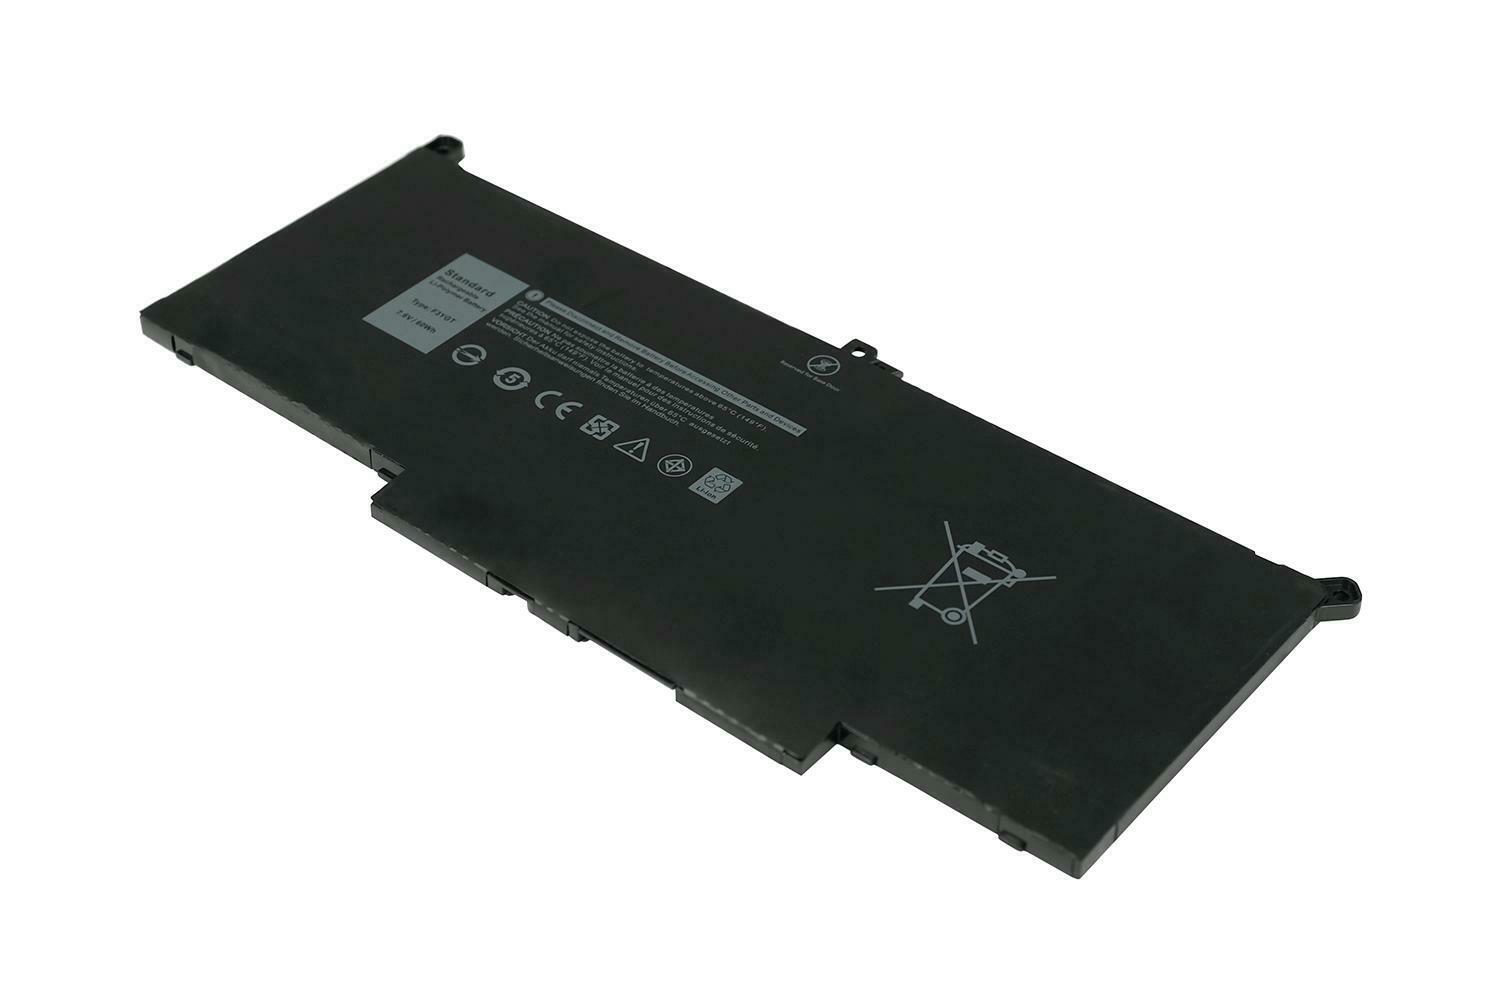 Bateria para F3YGT Dell latitude 7490 (i5-8350U FHD) P73G002 P29S002 KG7VF 2X39G